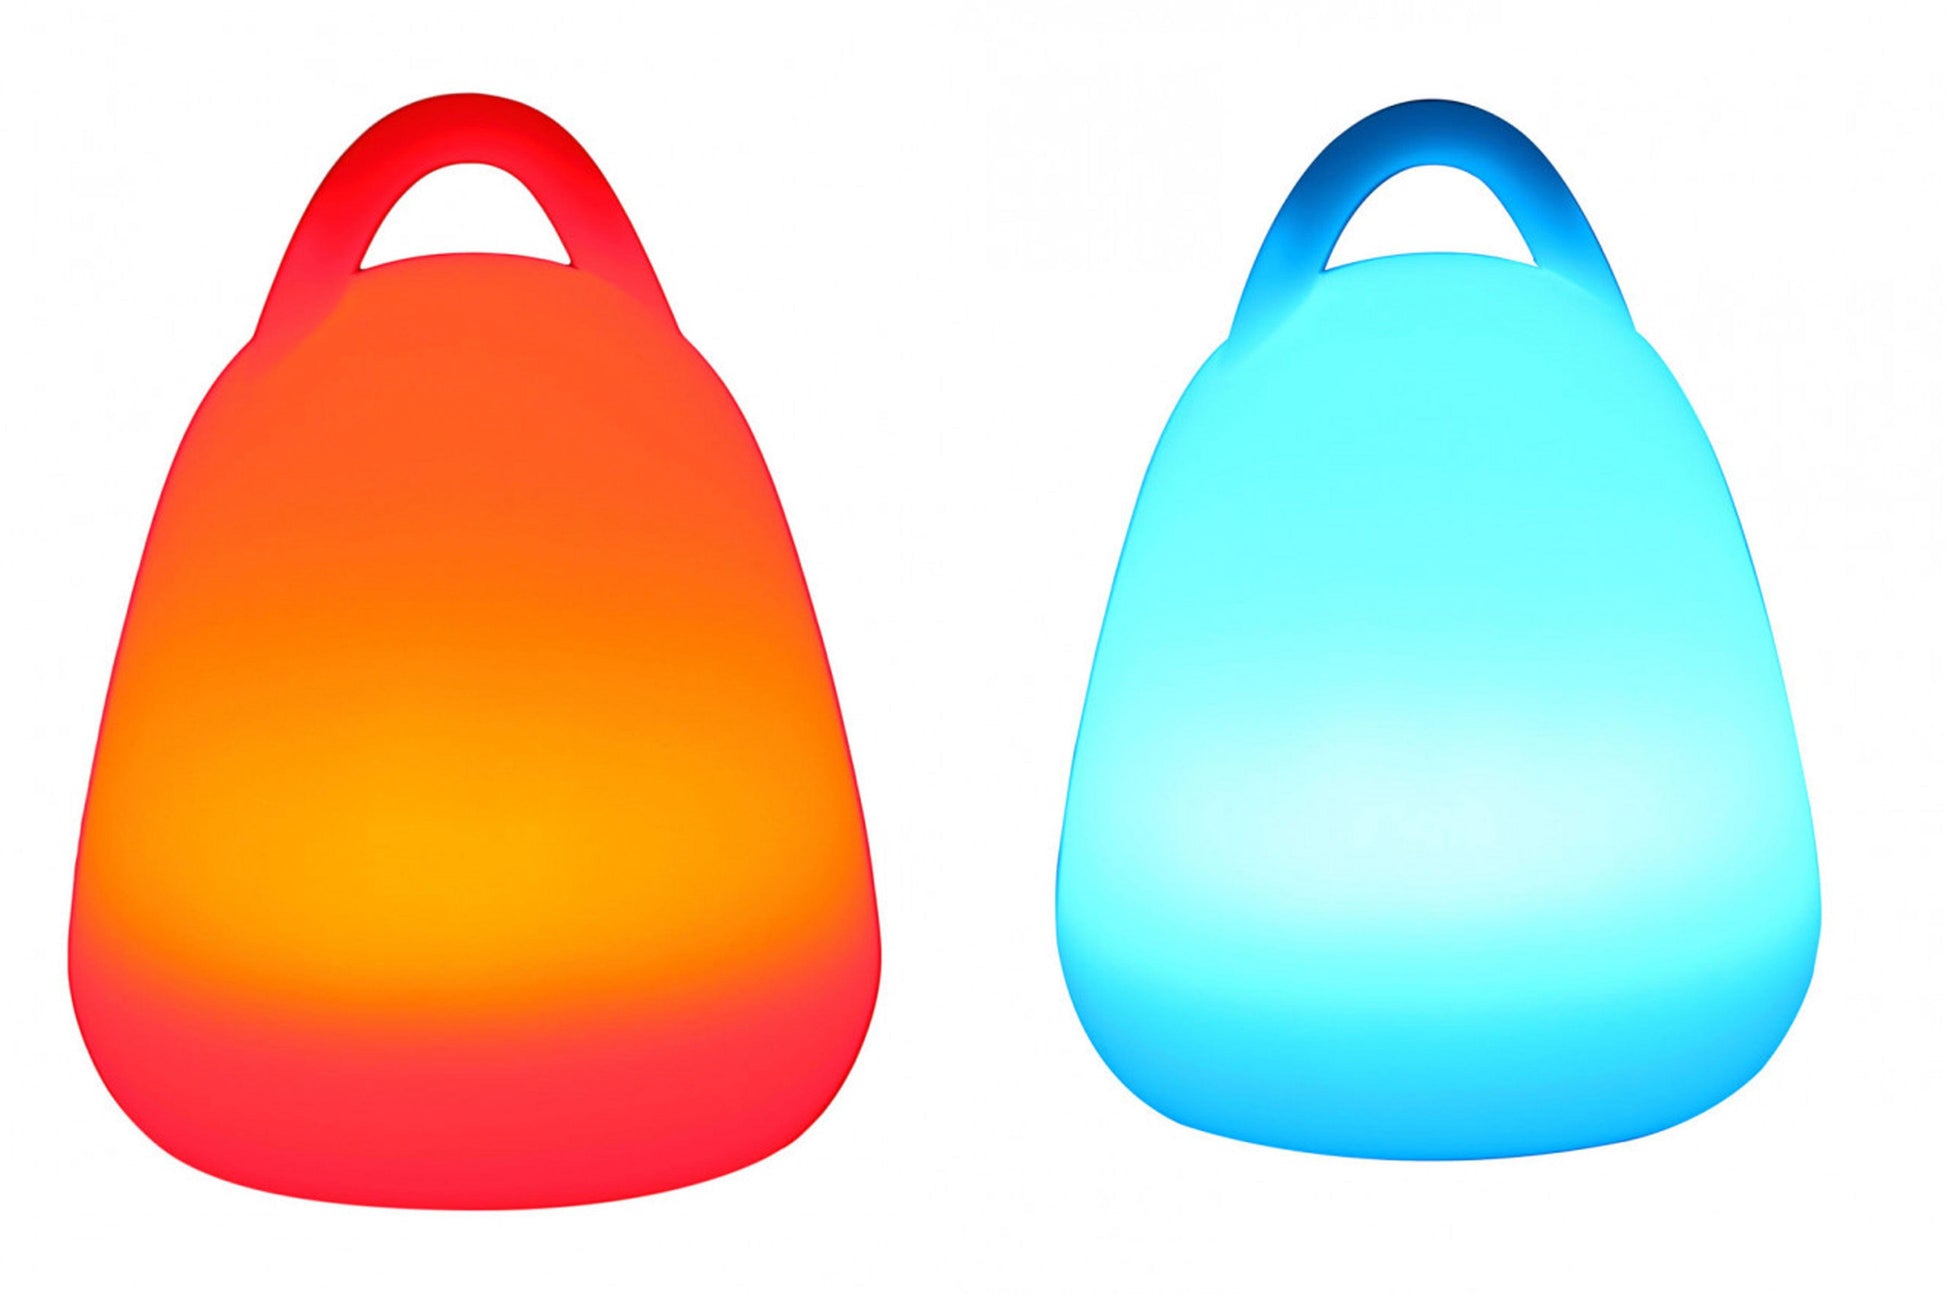 LED Egg Lamp with Handle - Venini Furniture 